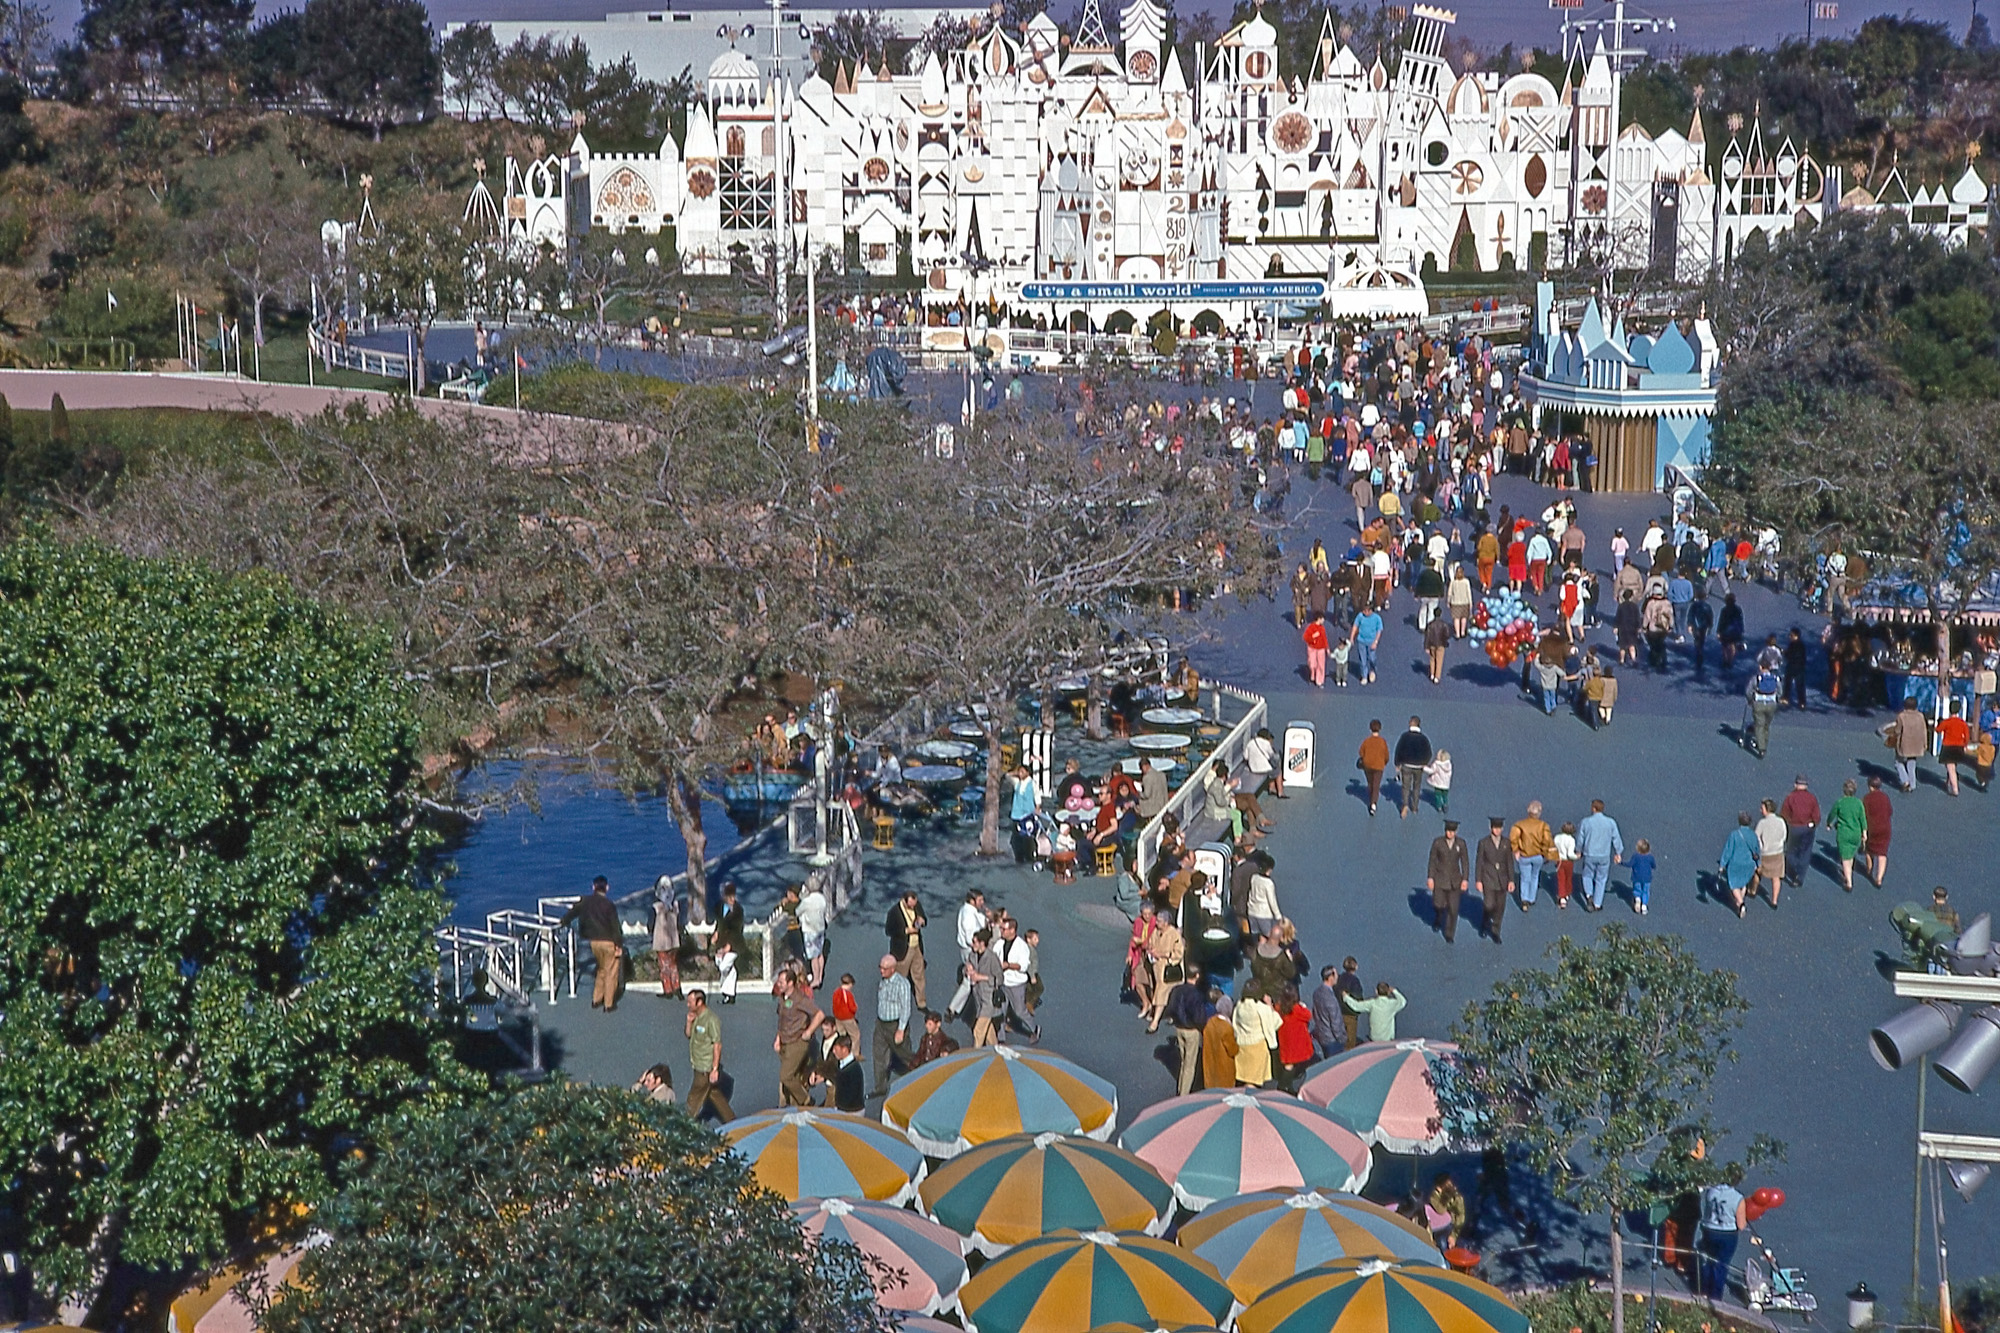 Disneyland, 1969. Kodachrome slide by my dad. View full size.